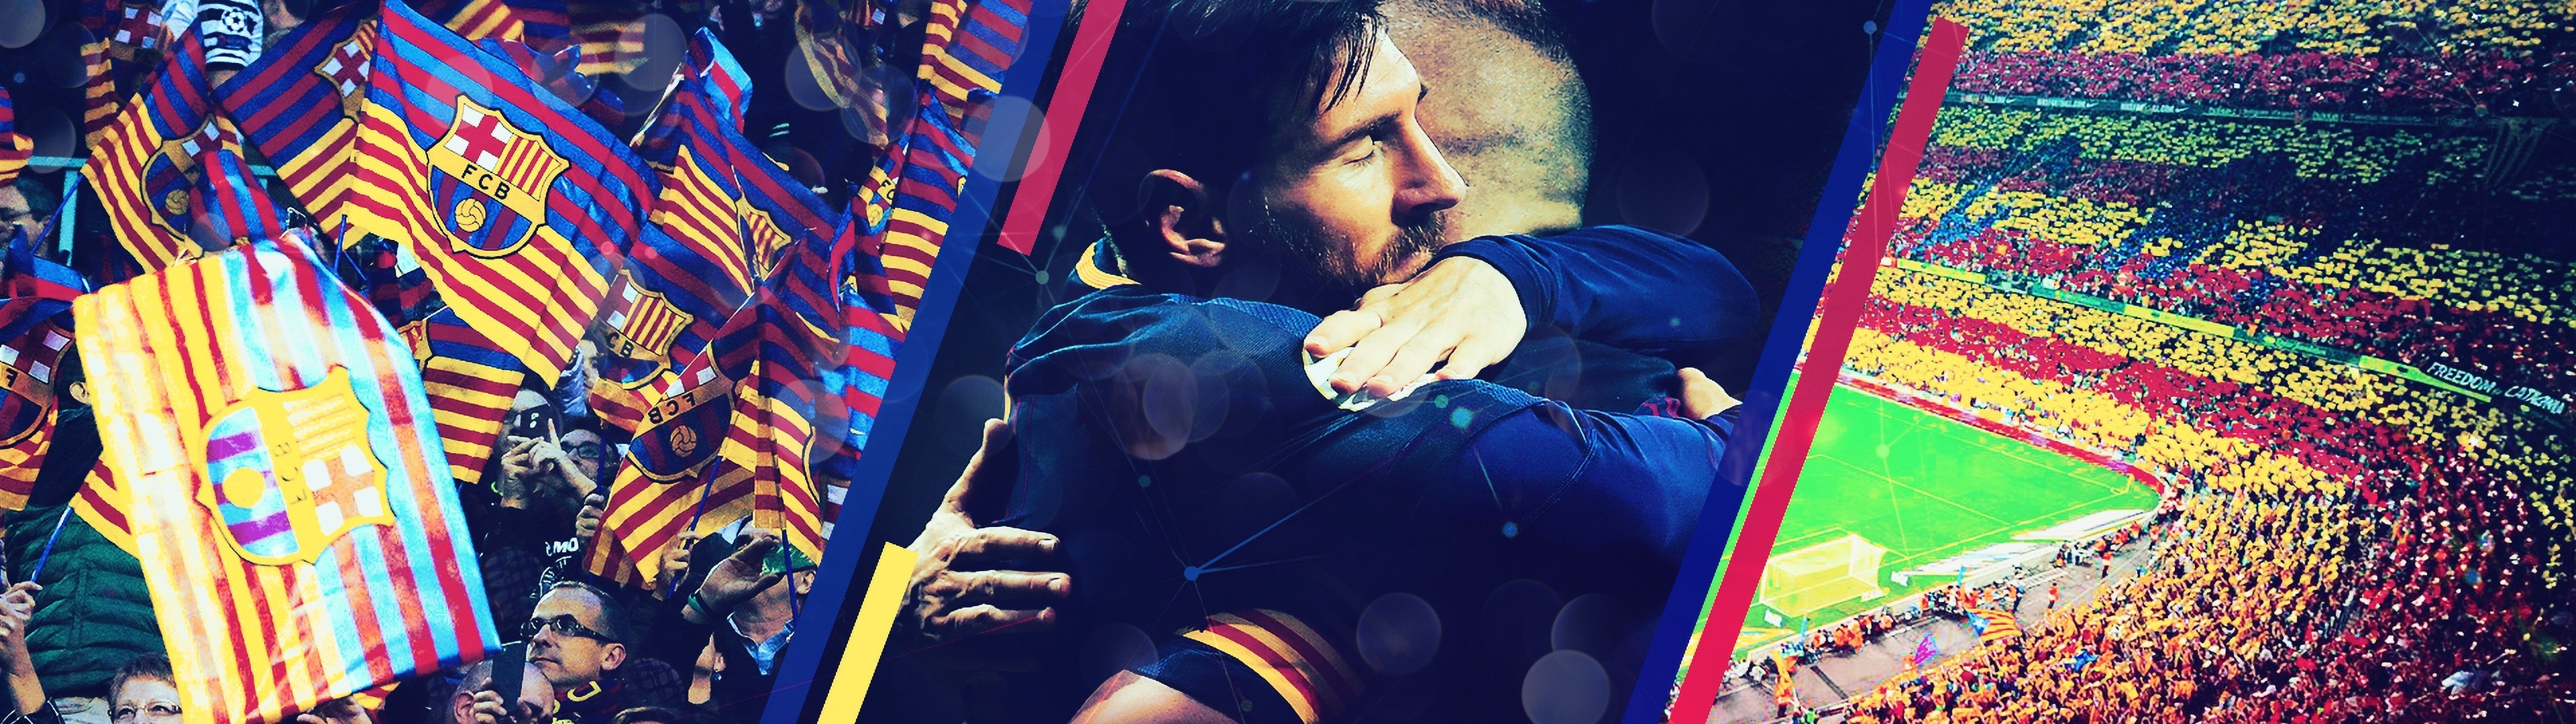 Lionel Messi, Barcelona, Iniesta - Barcelona Stadium Background 4k - HD Wallpaper 